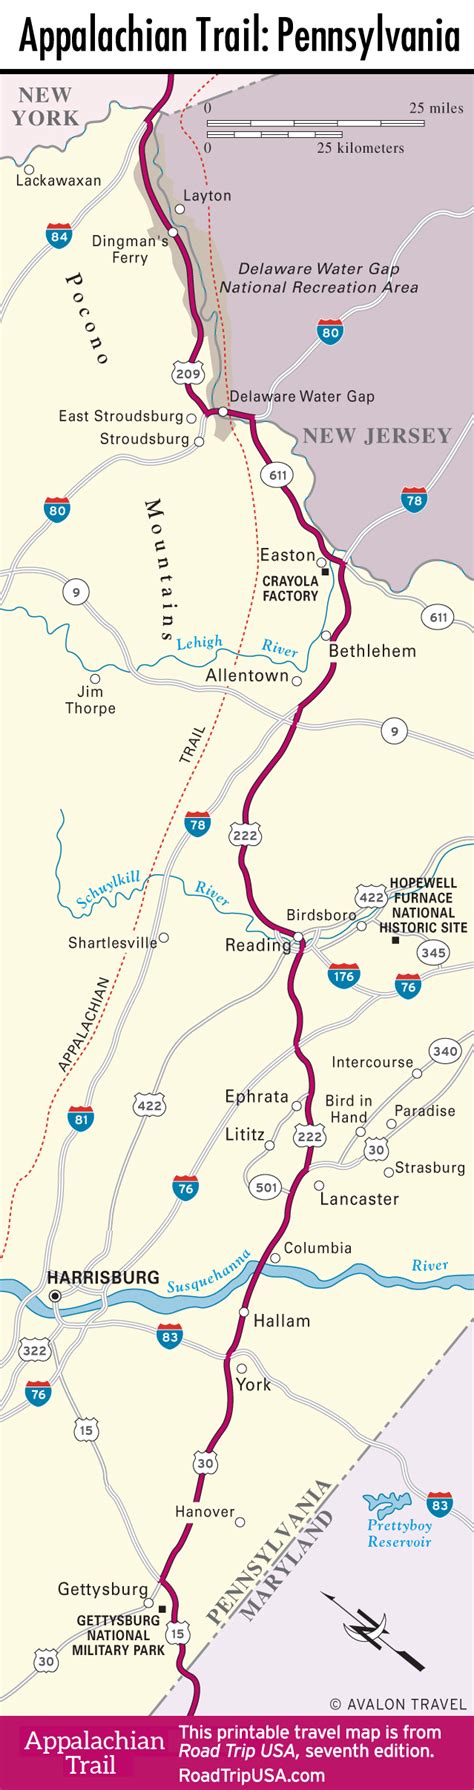 Appalachian Trail Map Of Pennsylvania